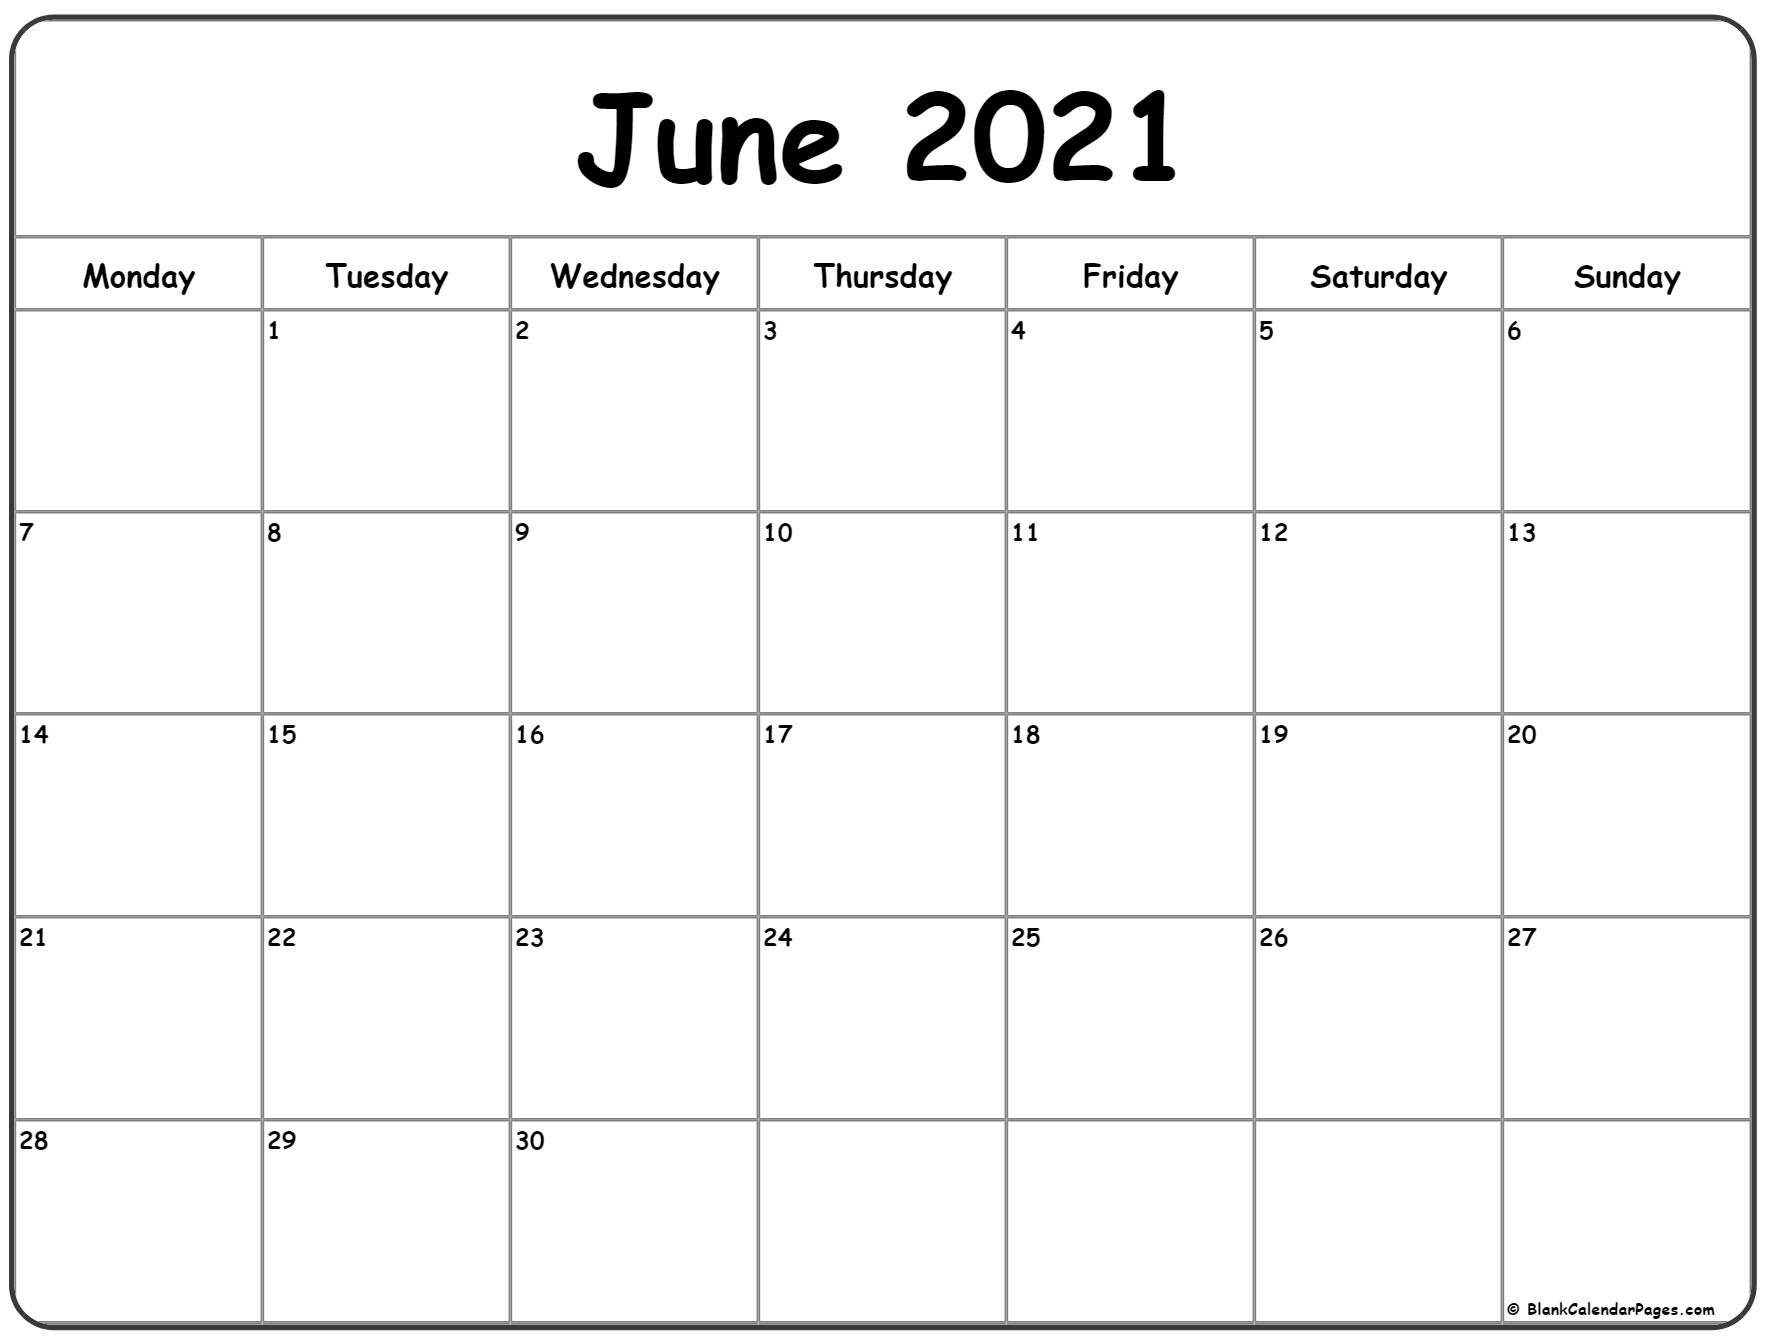 June 2021 Monday Calendar | Monday To Sunday